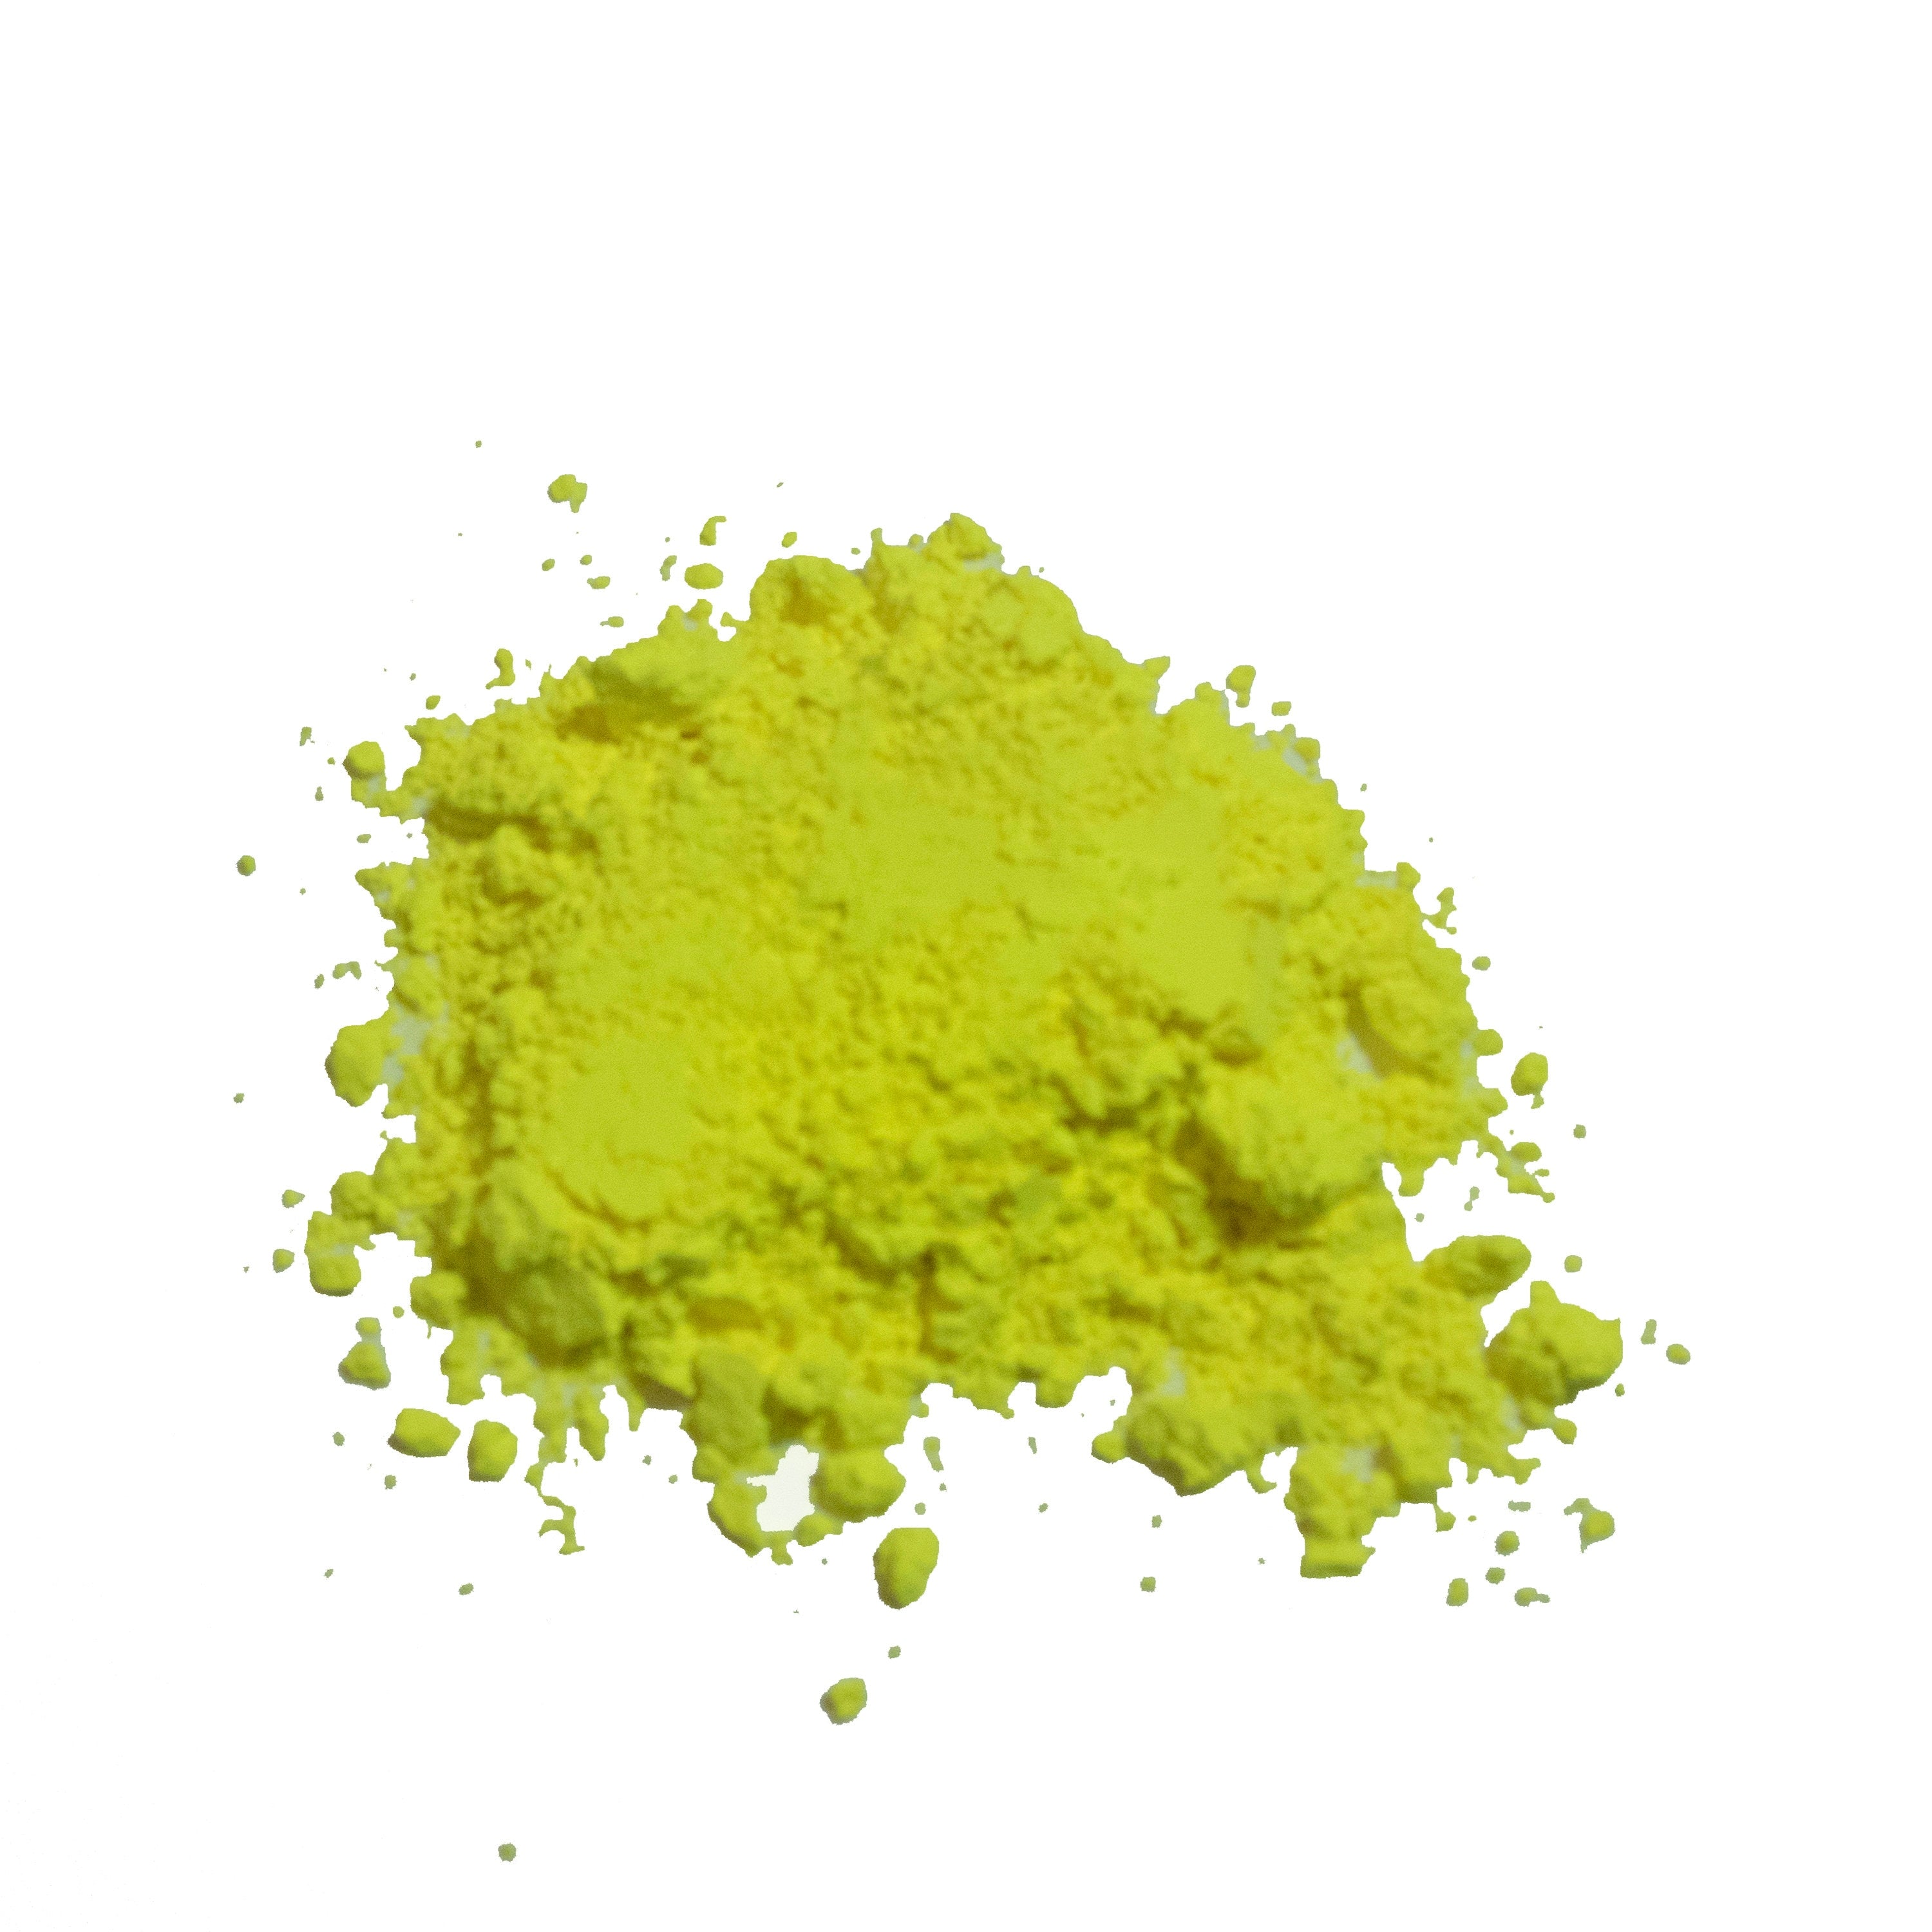 Yellow Fluorescent Pigment Powder